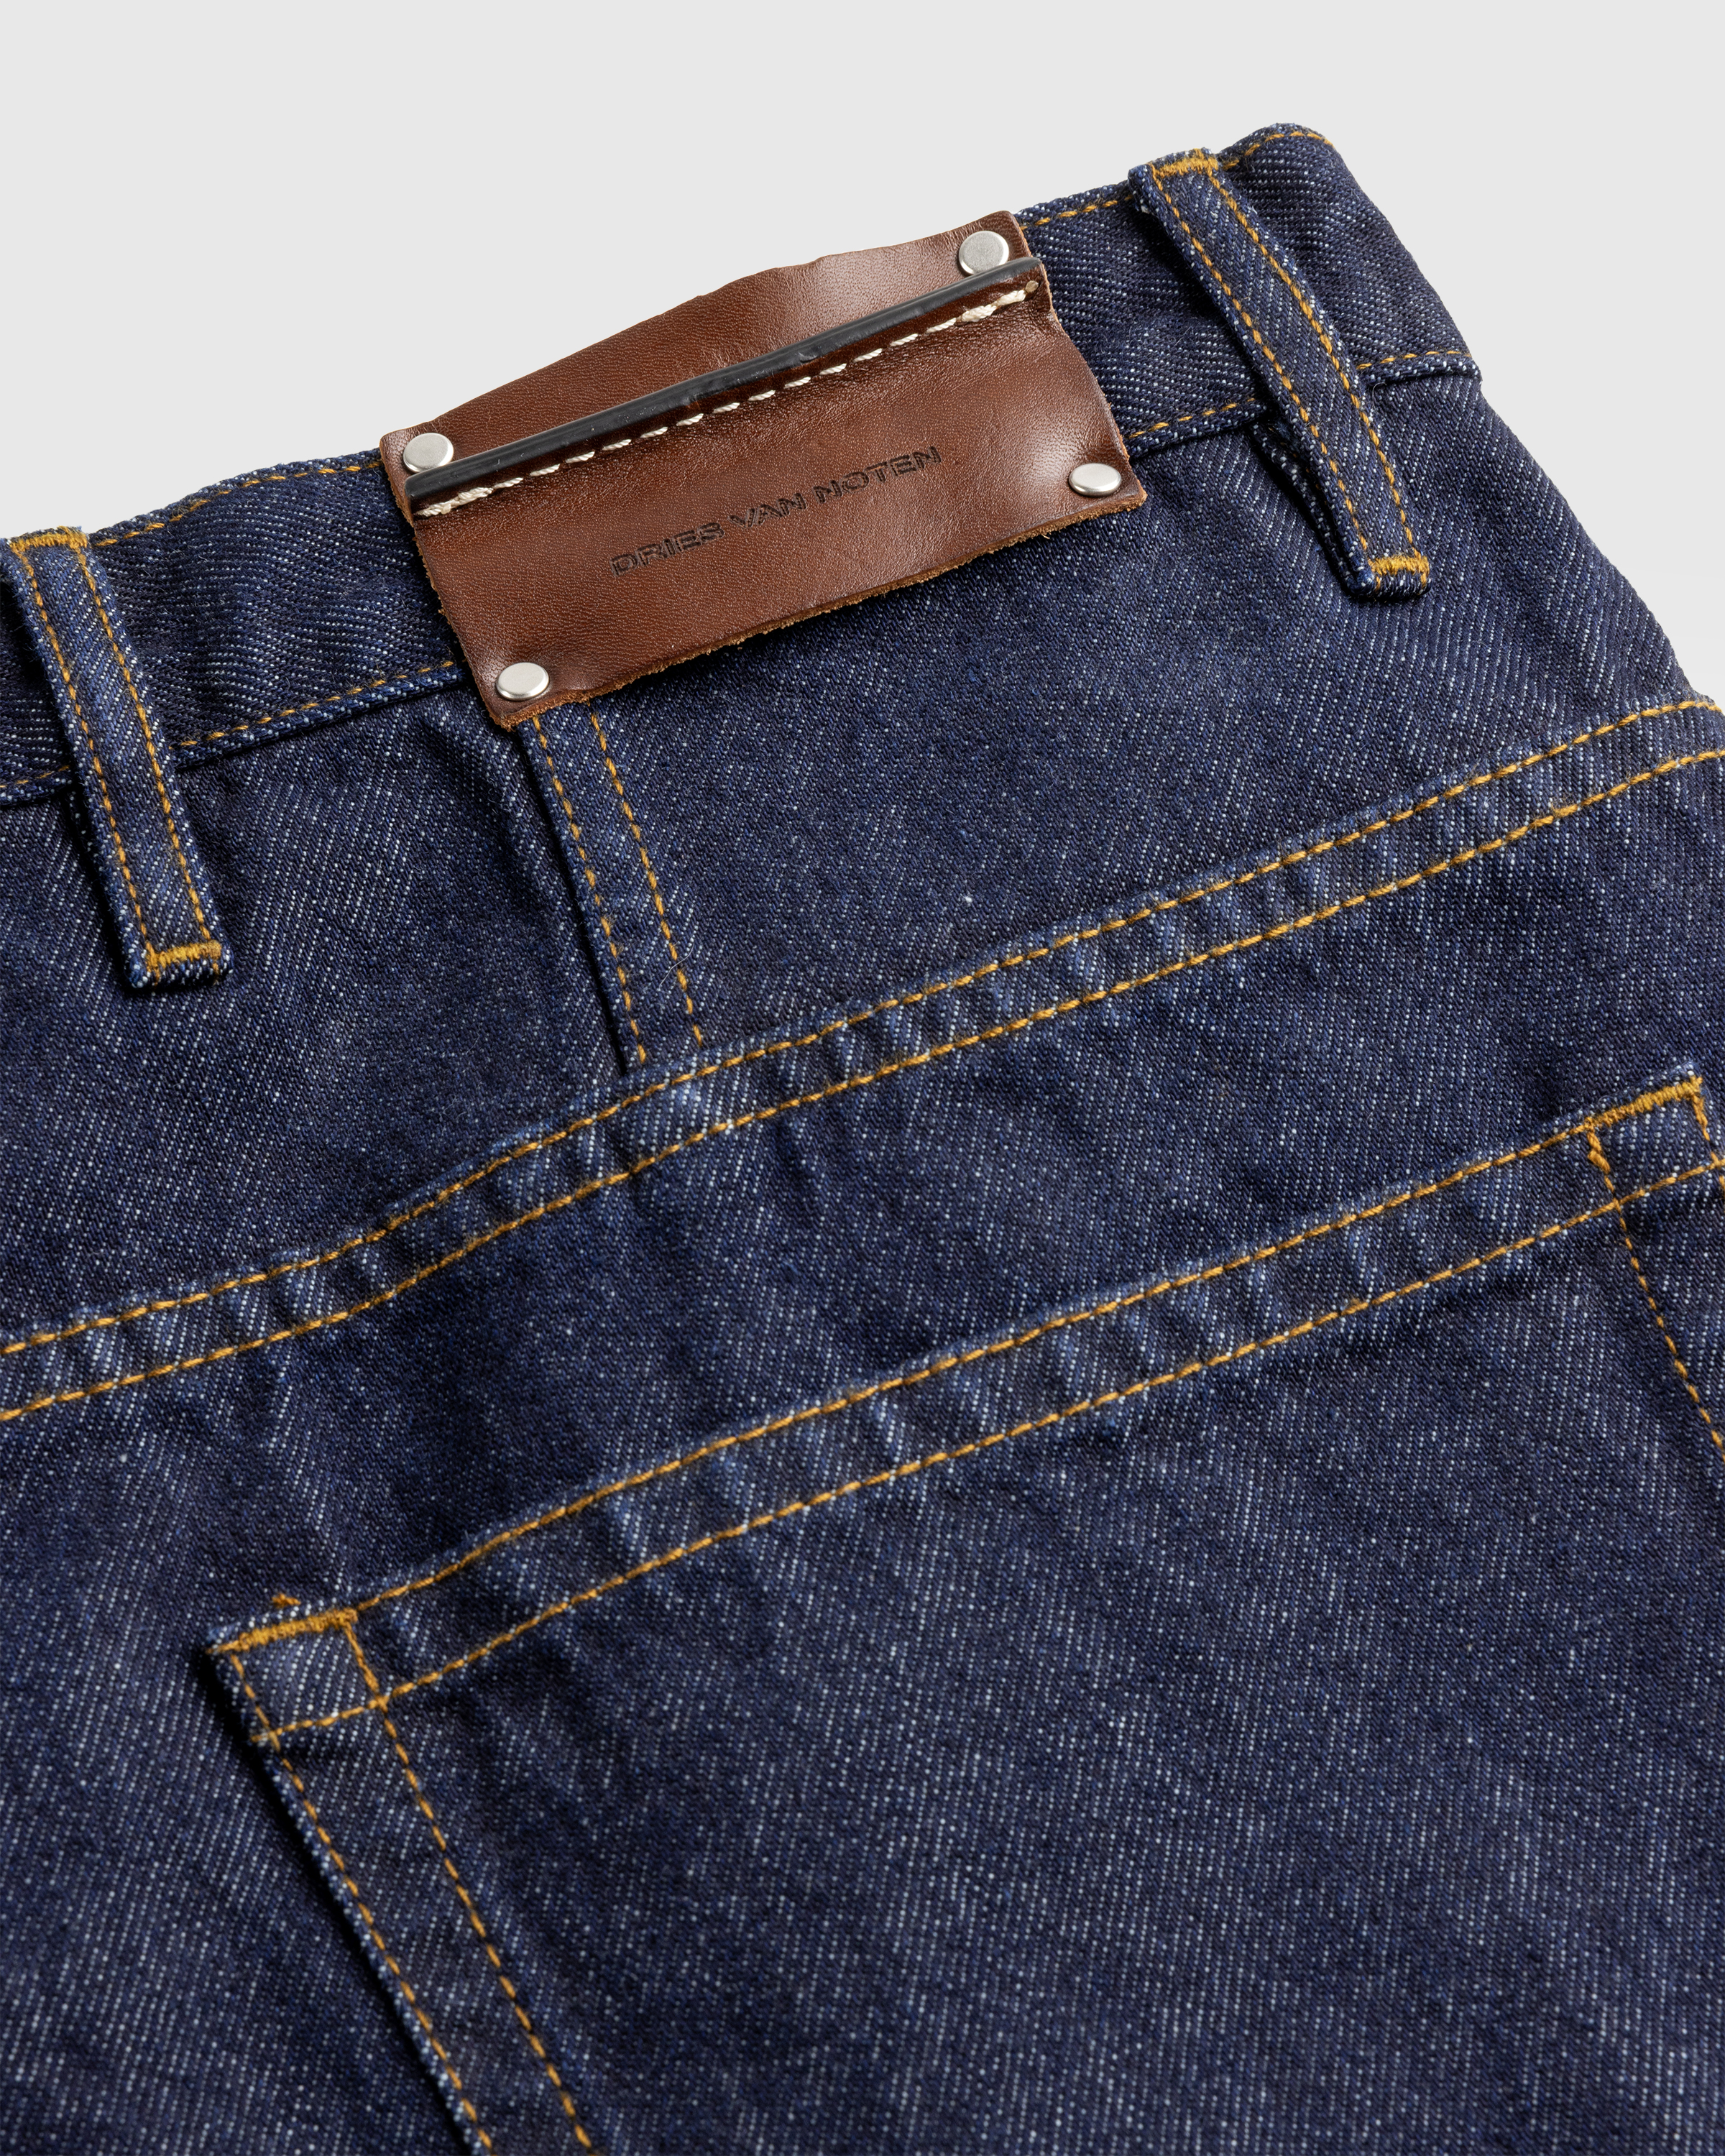 Dries van Noten – Pickerby Pants Indigo - Trousers - Blue - Image 7